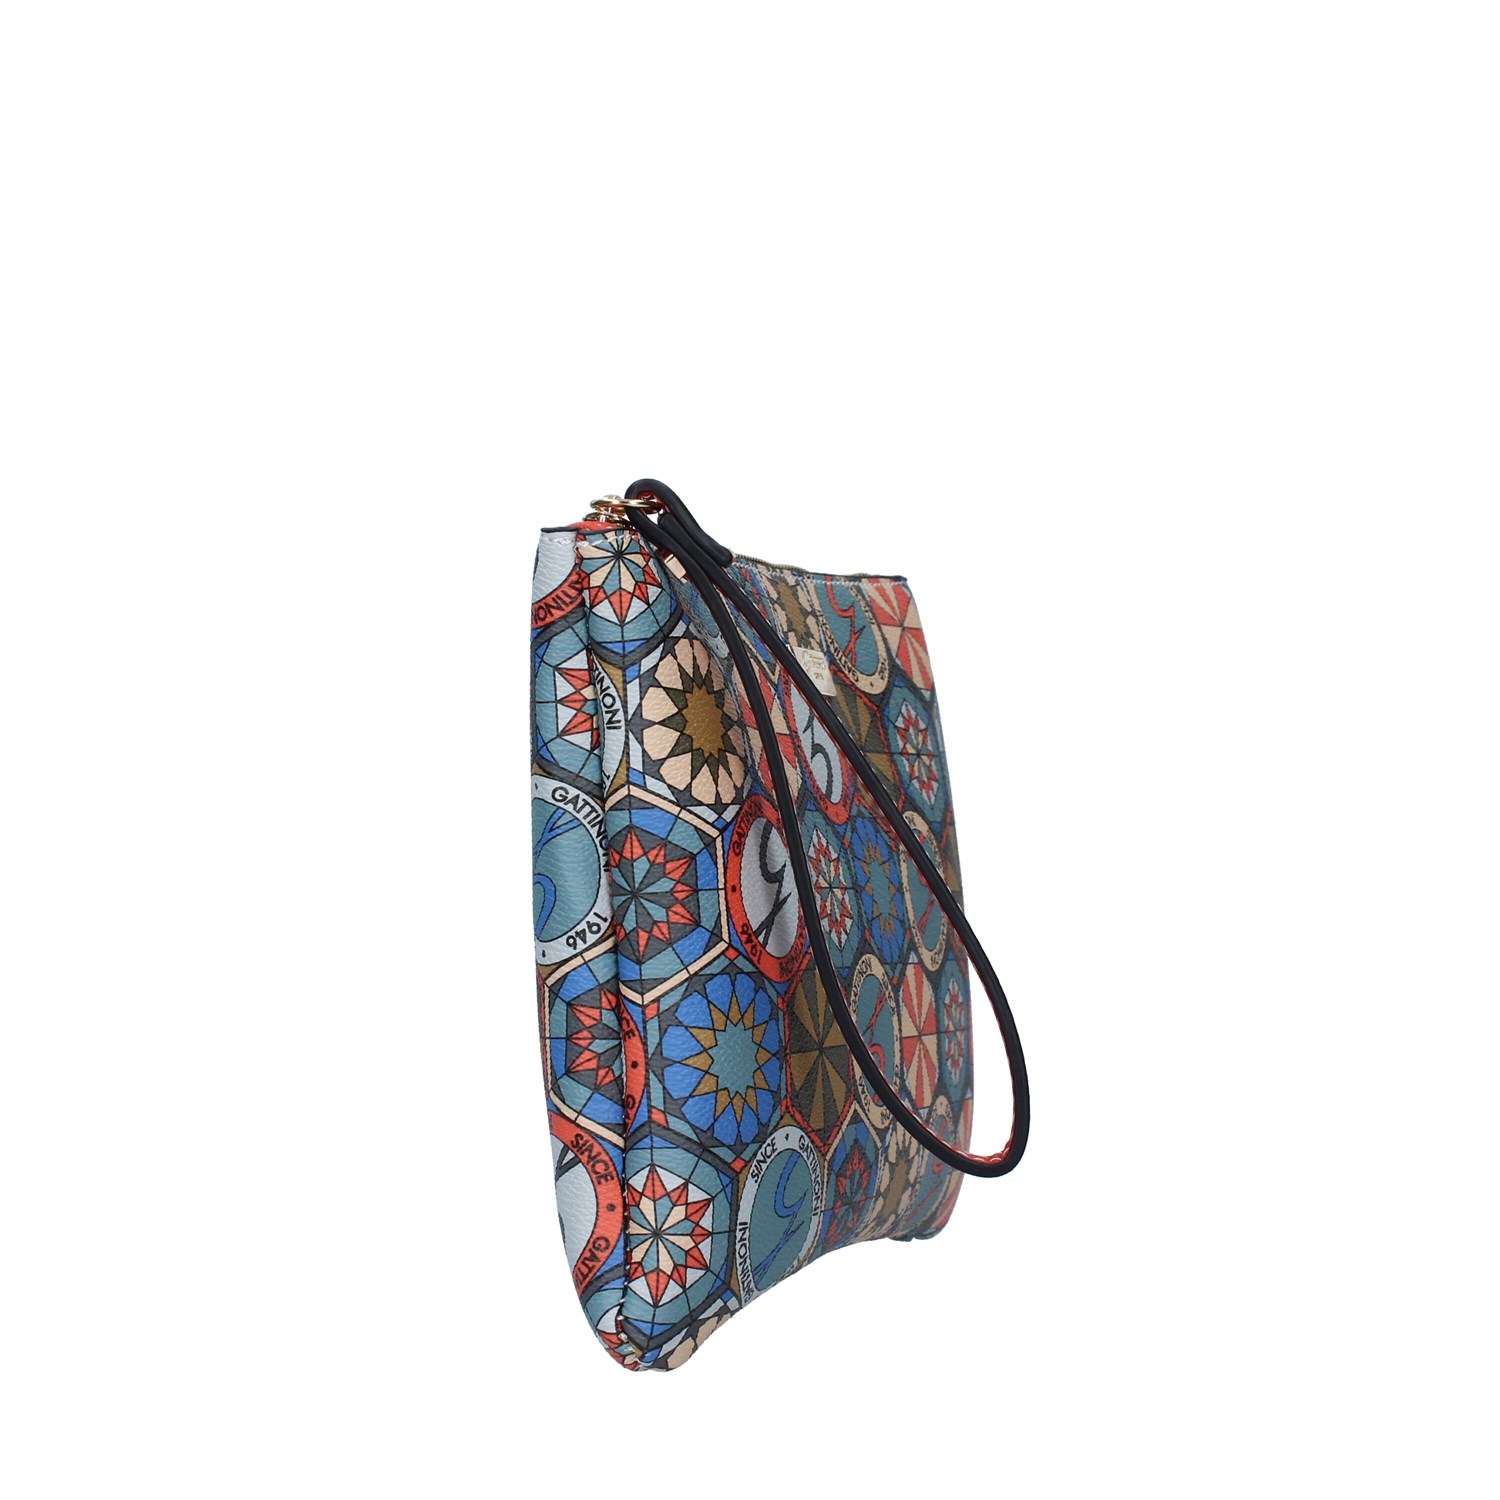 Gattinoni Roma Bags Accessories Beauty BLUE BINTD7553WP